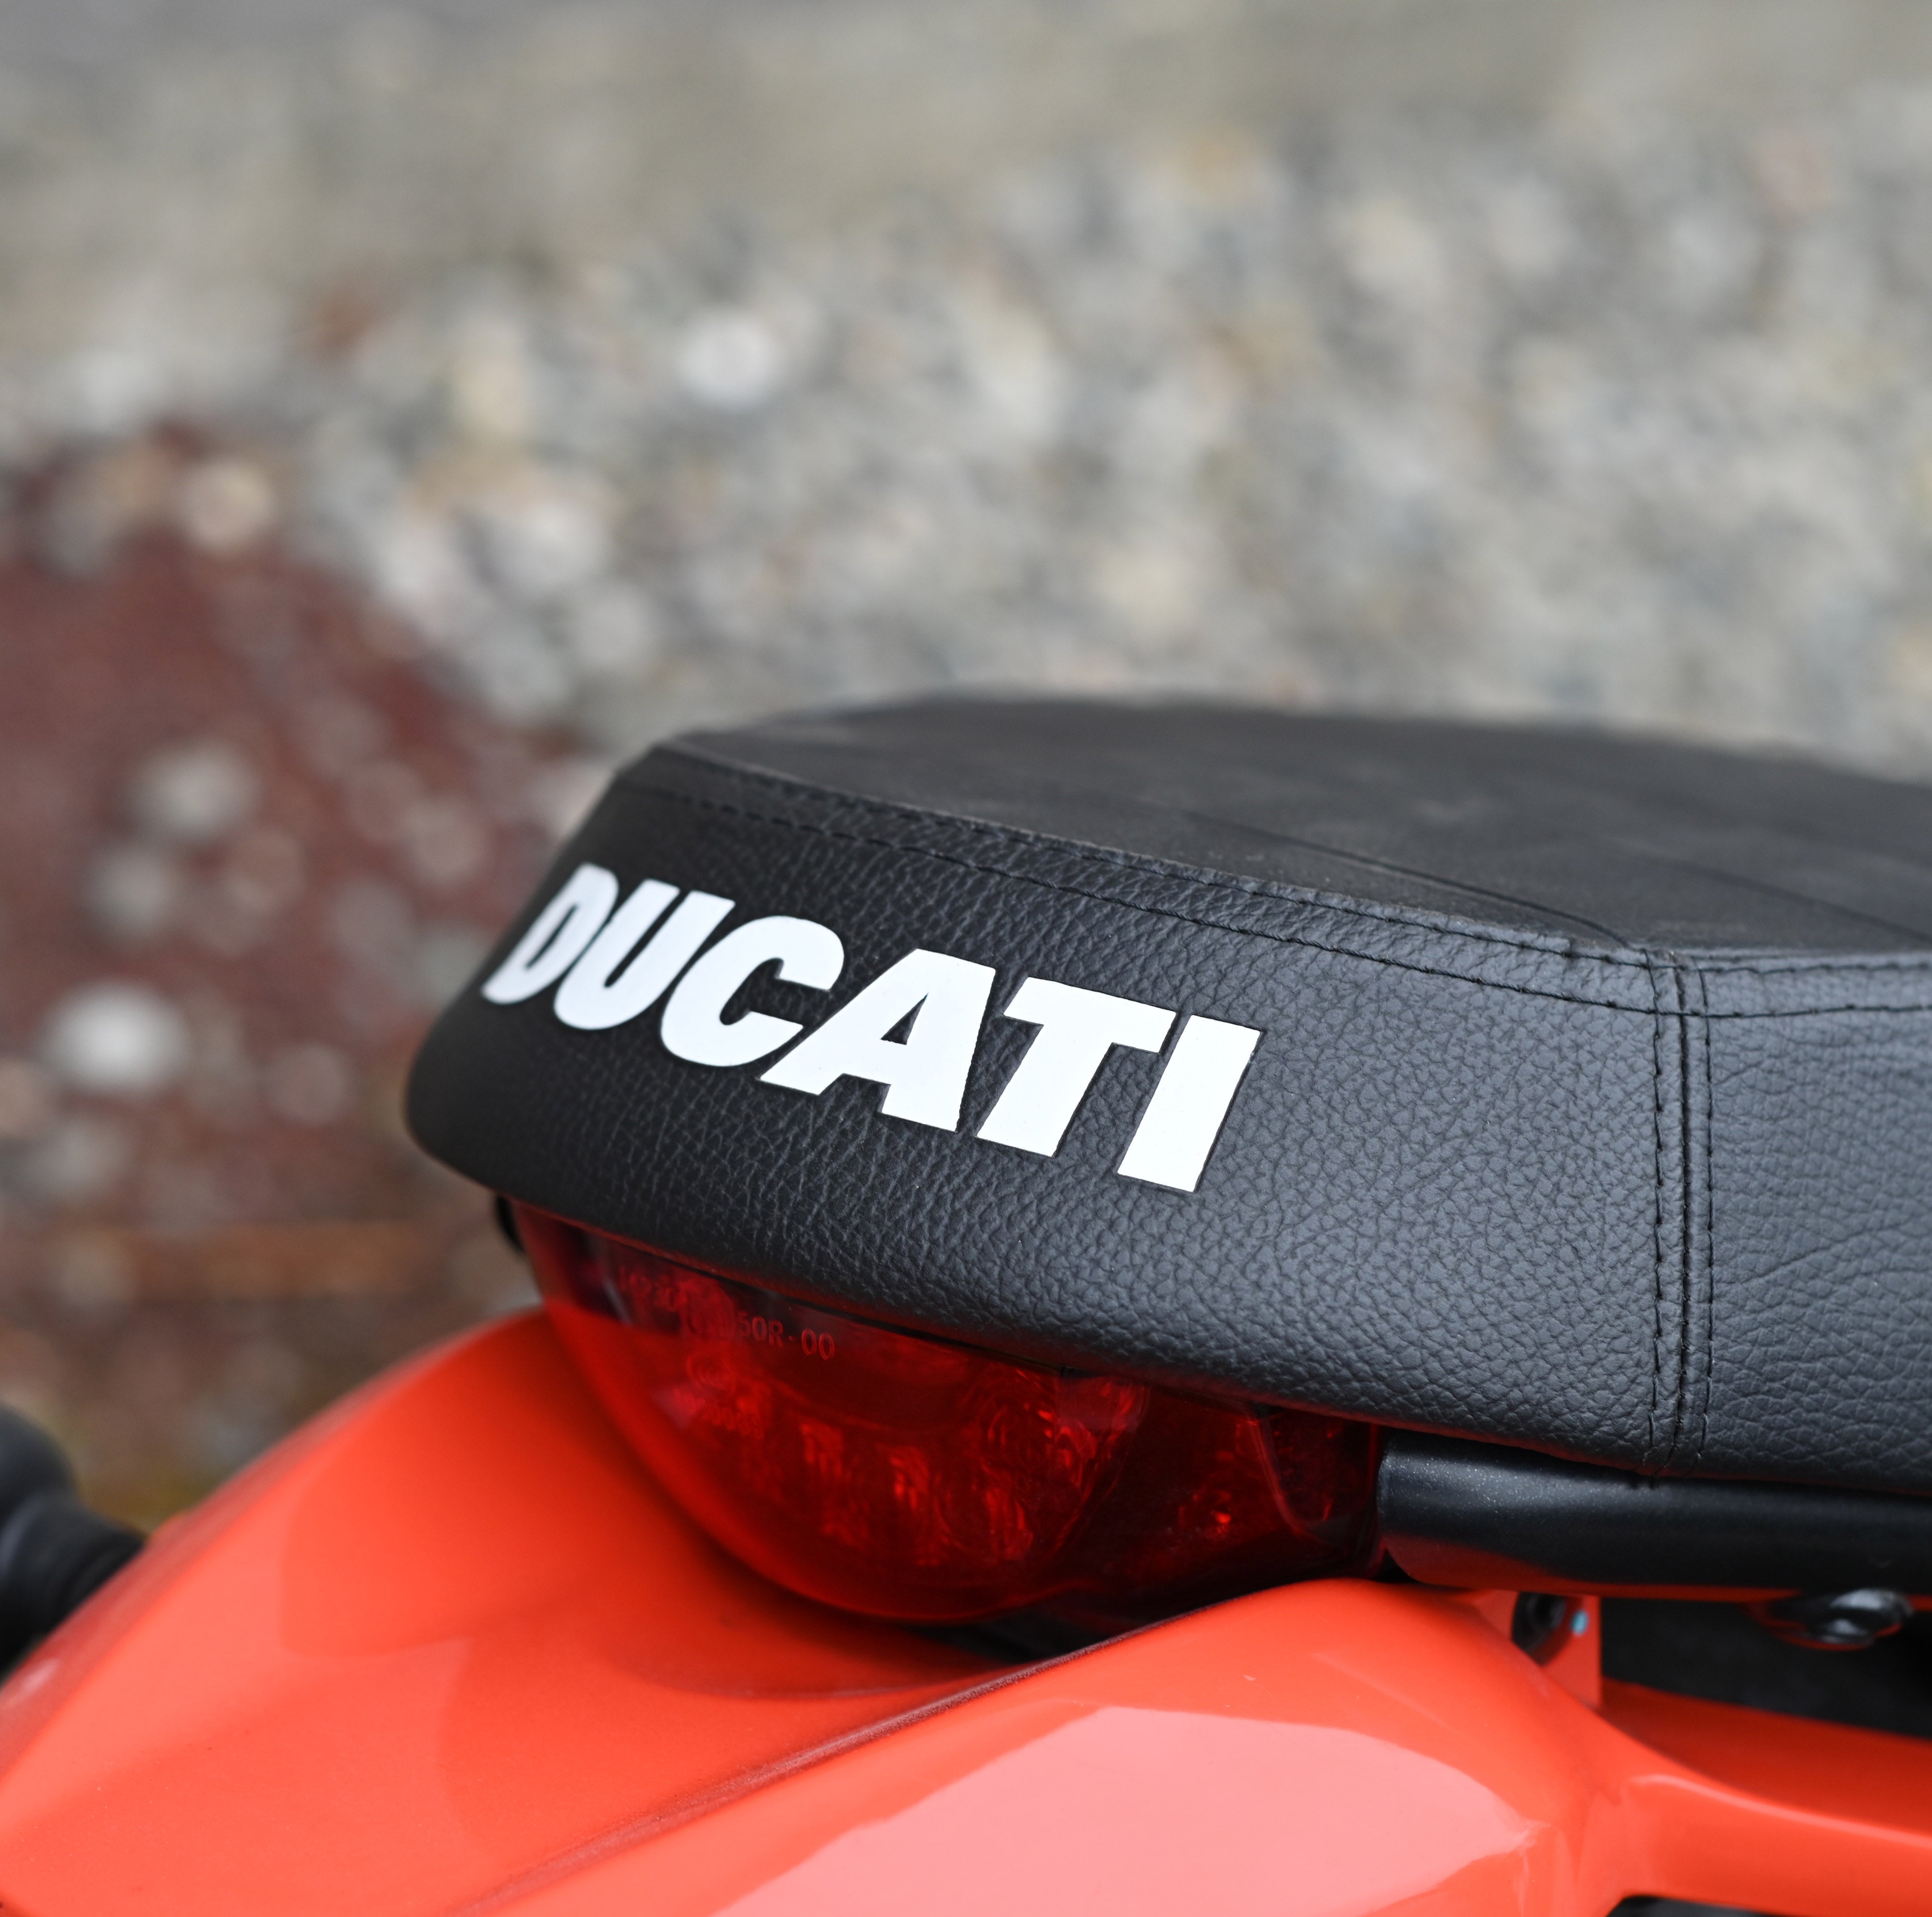 2016 Ducati Scrambler Sixty2 (3,850 Miles)